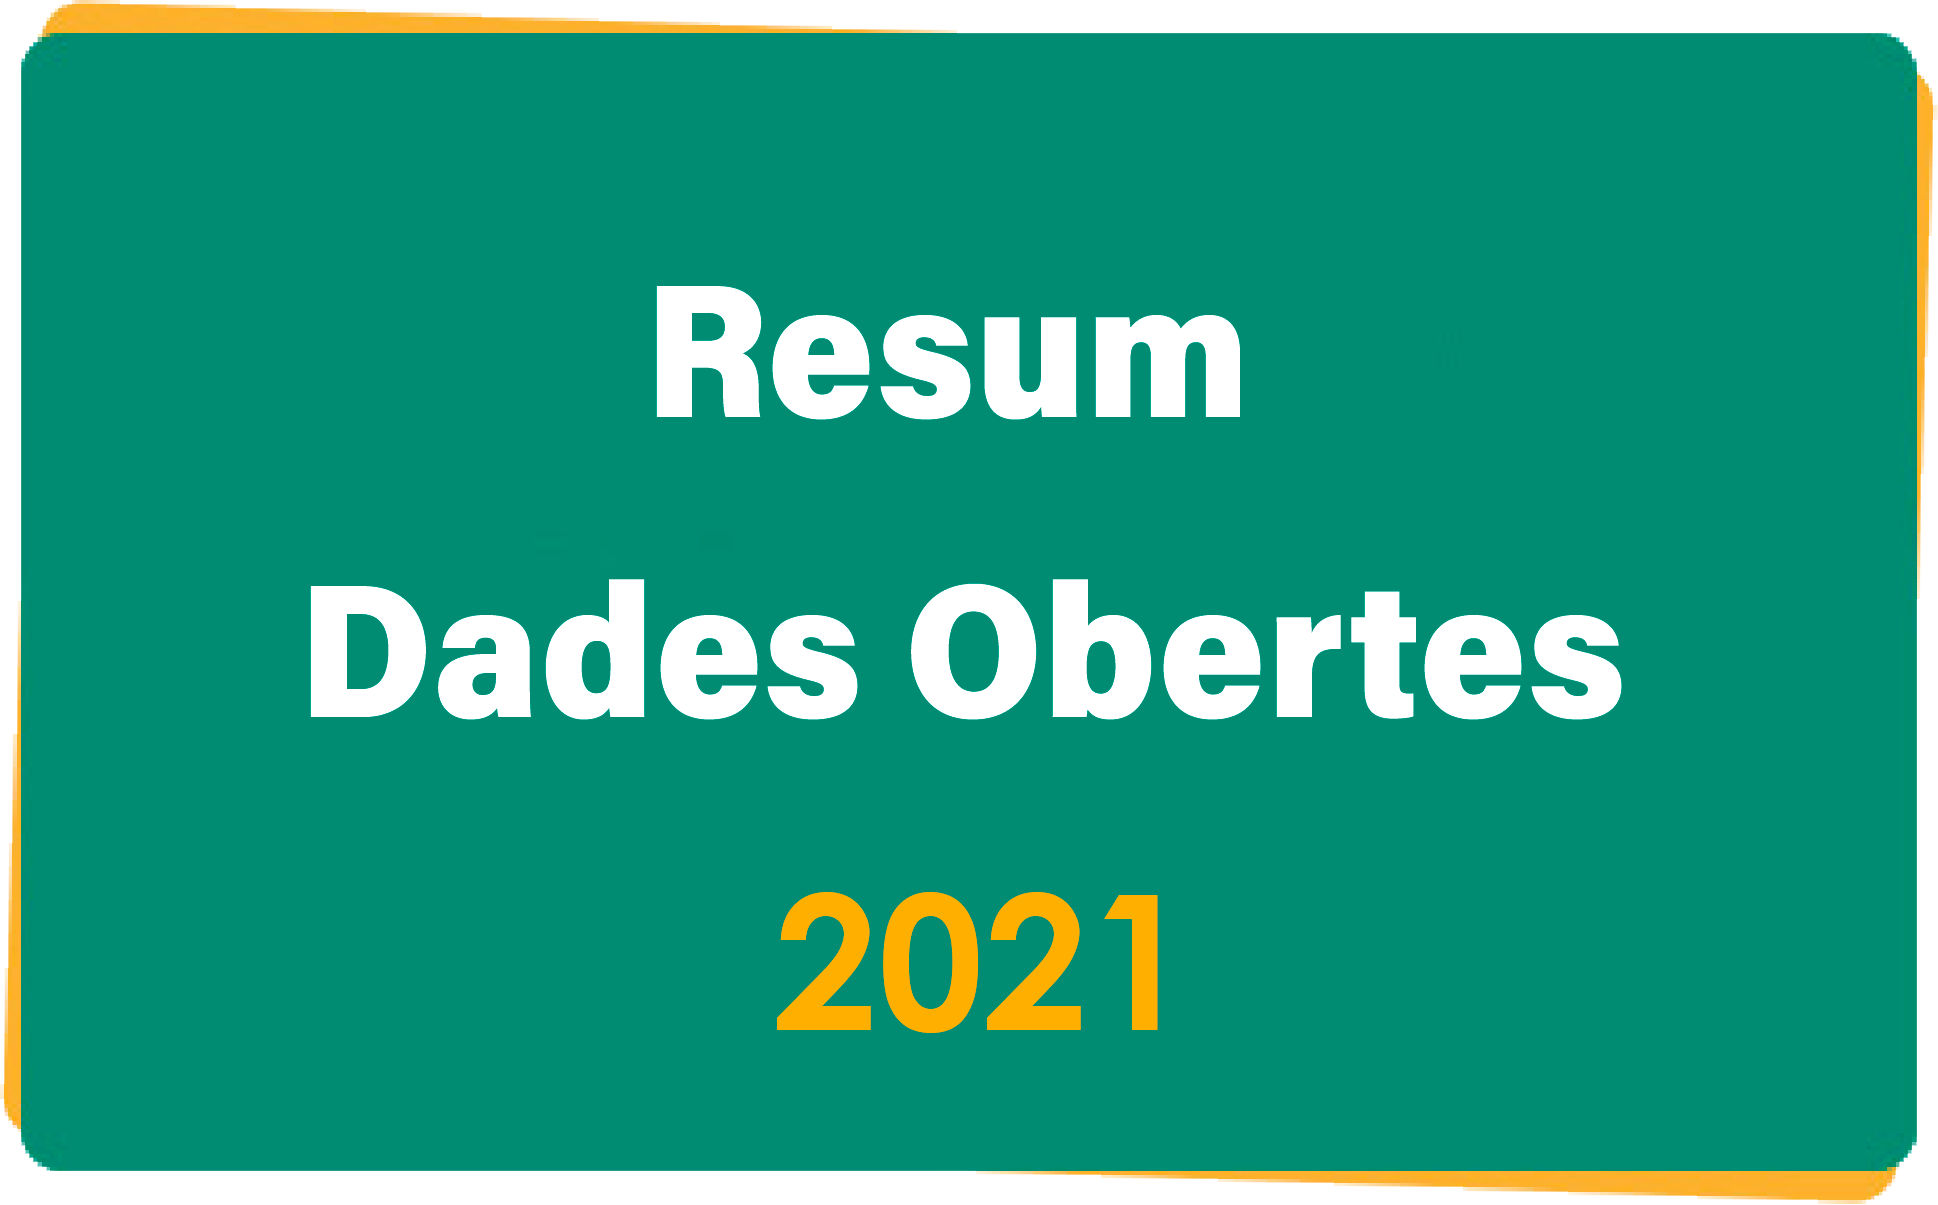 Resum Dades Obertes 2021